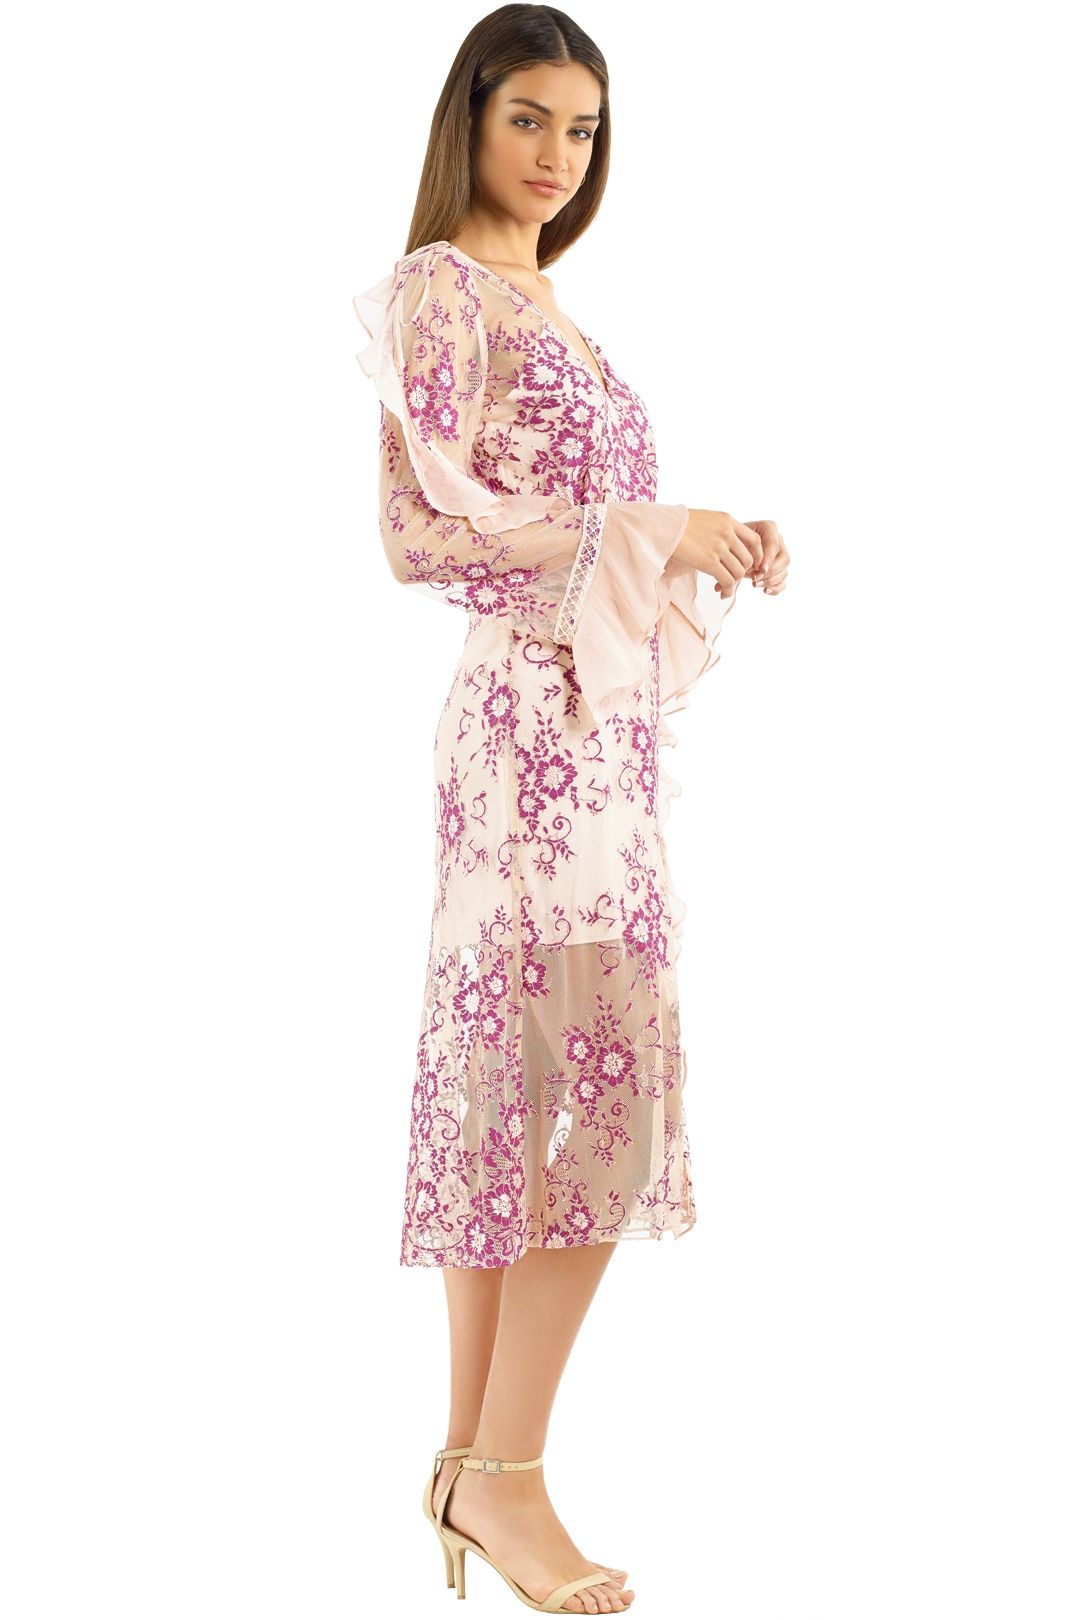 Talulah - Anaphora Midi Dress - Pink Multi - Side